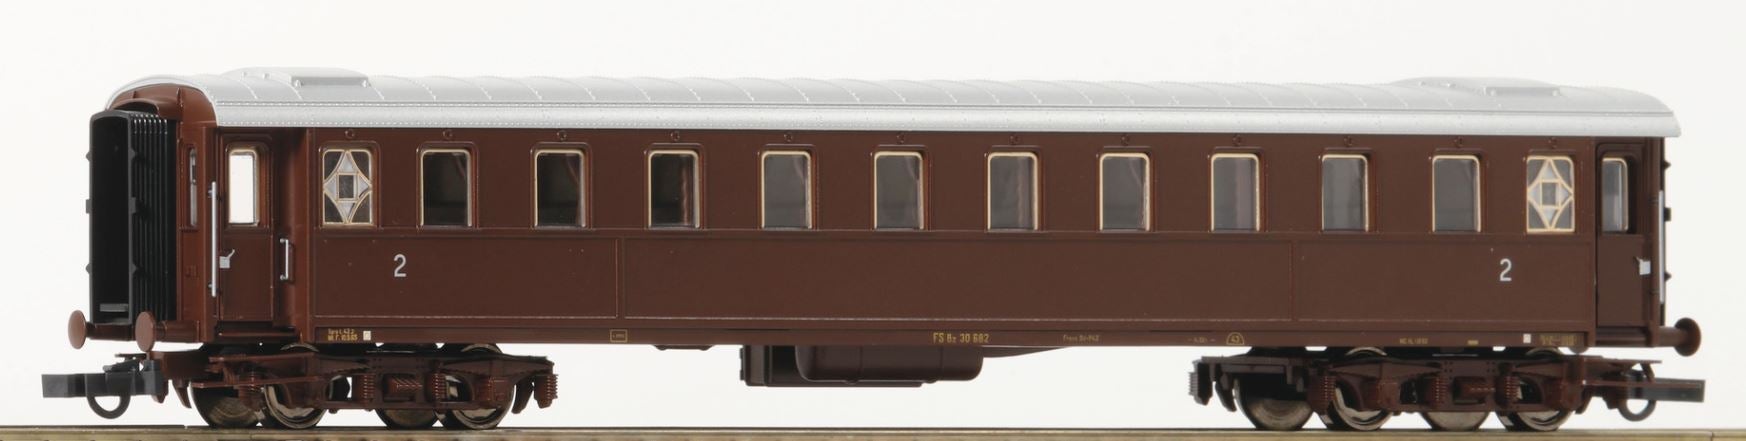 Roco 74382 H0 2nd Class Passenger Coach Series S30000, FS, Ep III